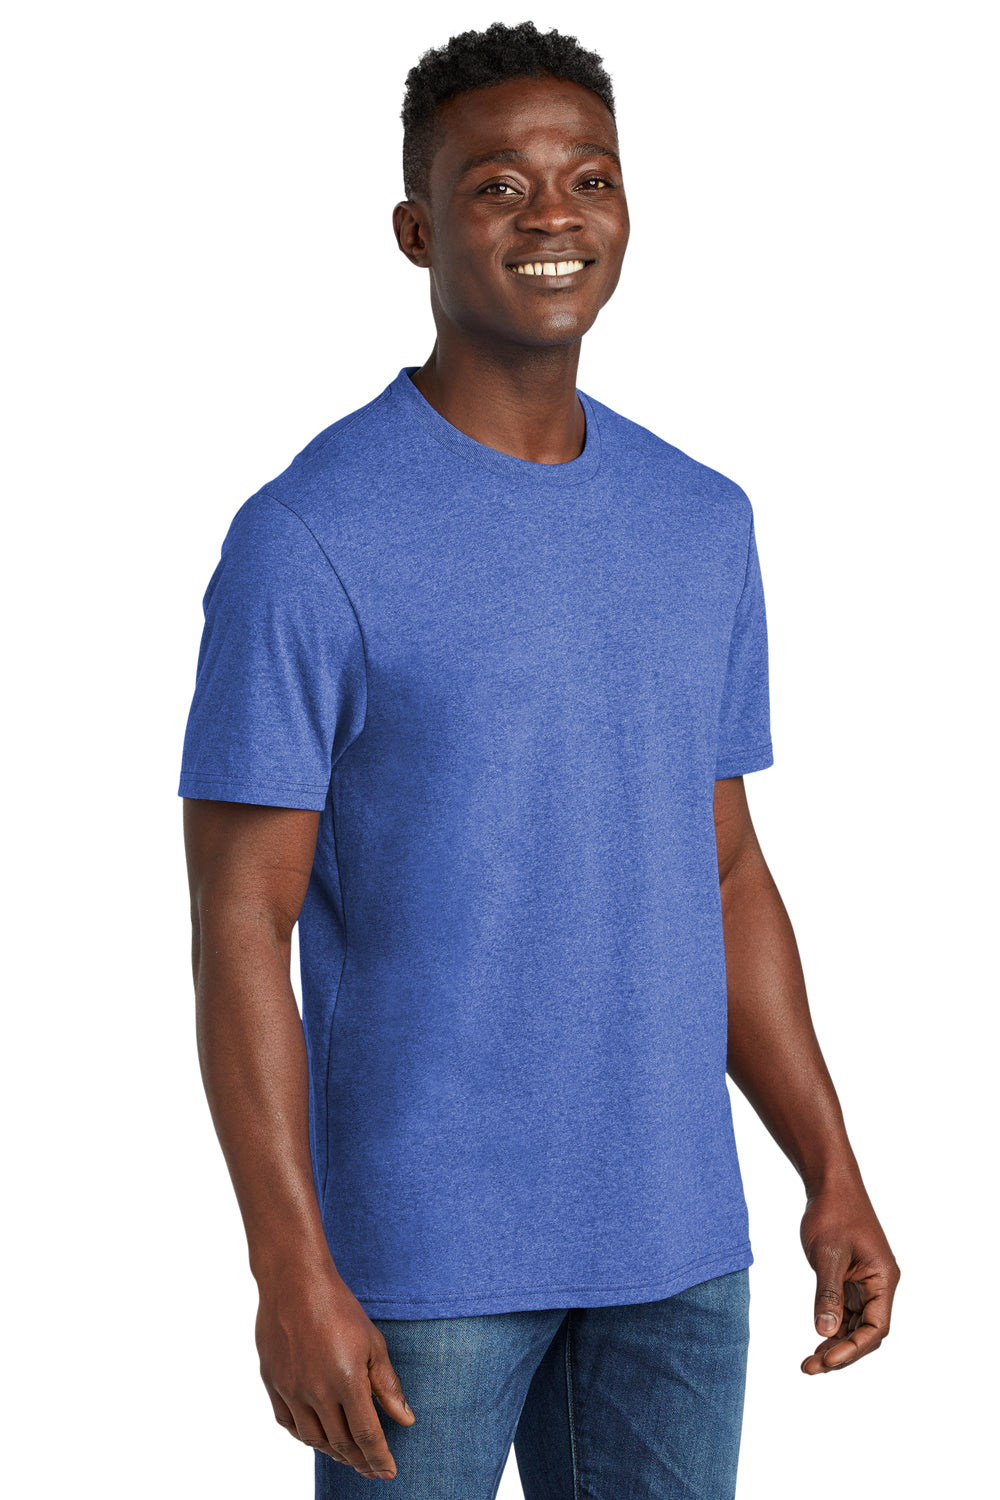 Allmade AL2300 Mens Recycled Short Sleeve Crewneck T-Shirt Heather Royal Blue Model 3Q